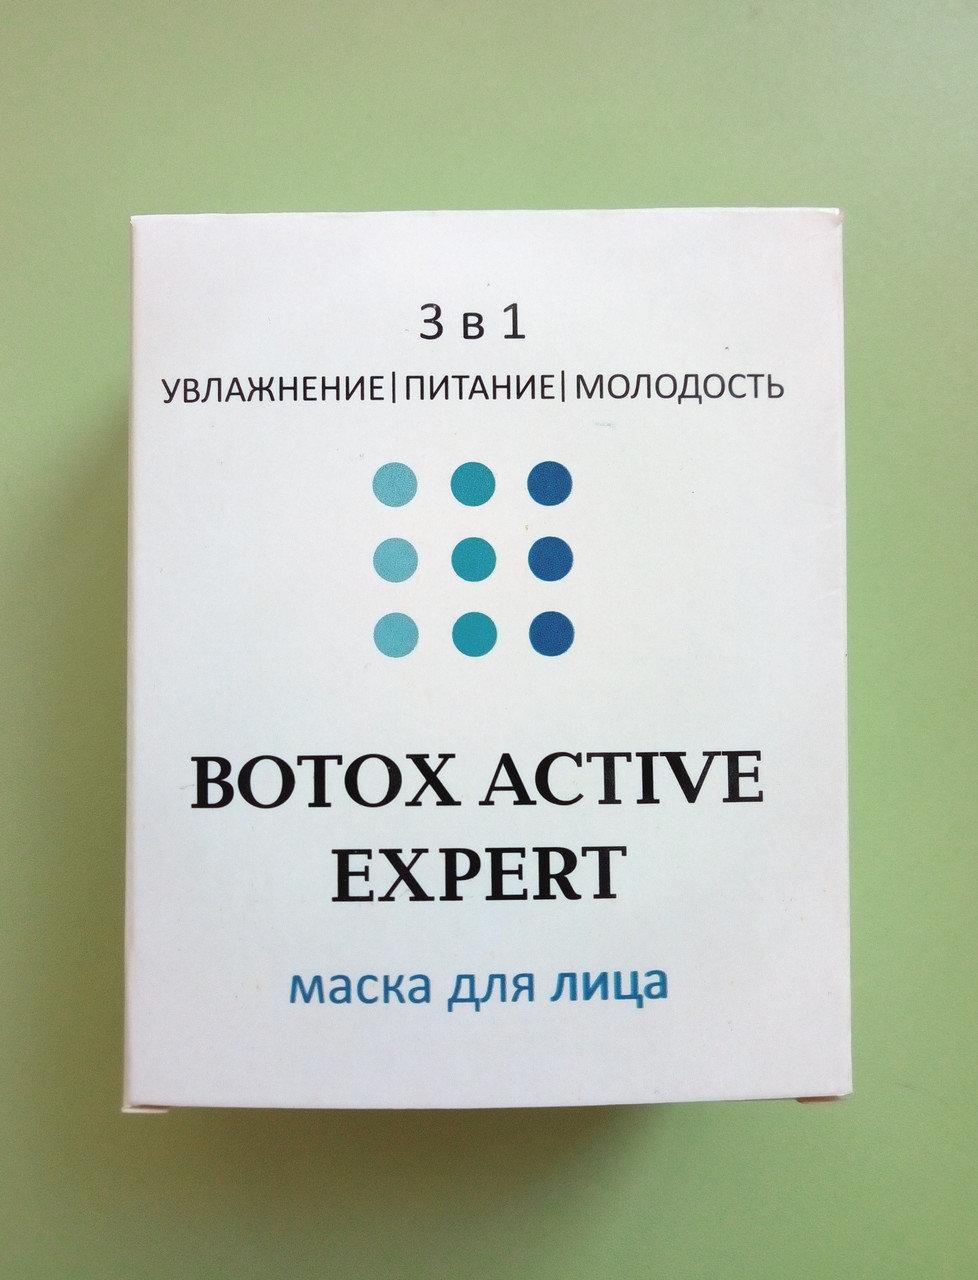 Botox Active Expert (ботокс актив експерт) – крем-маска